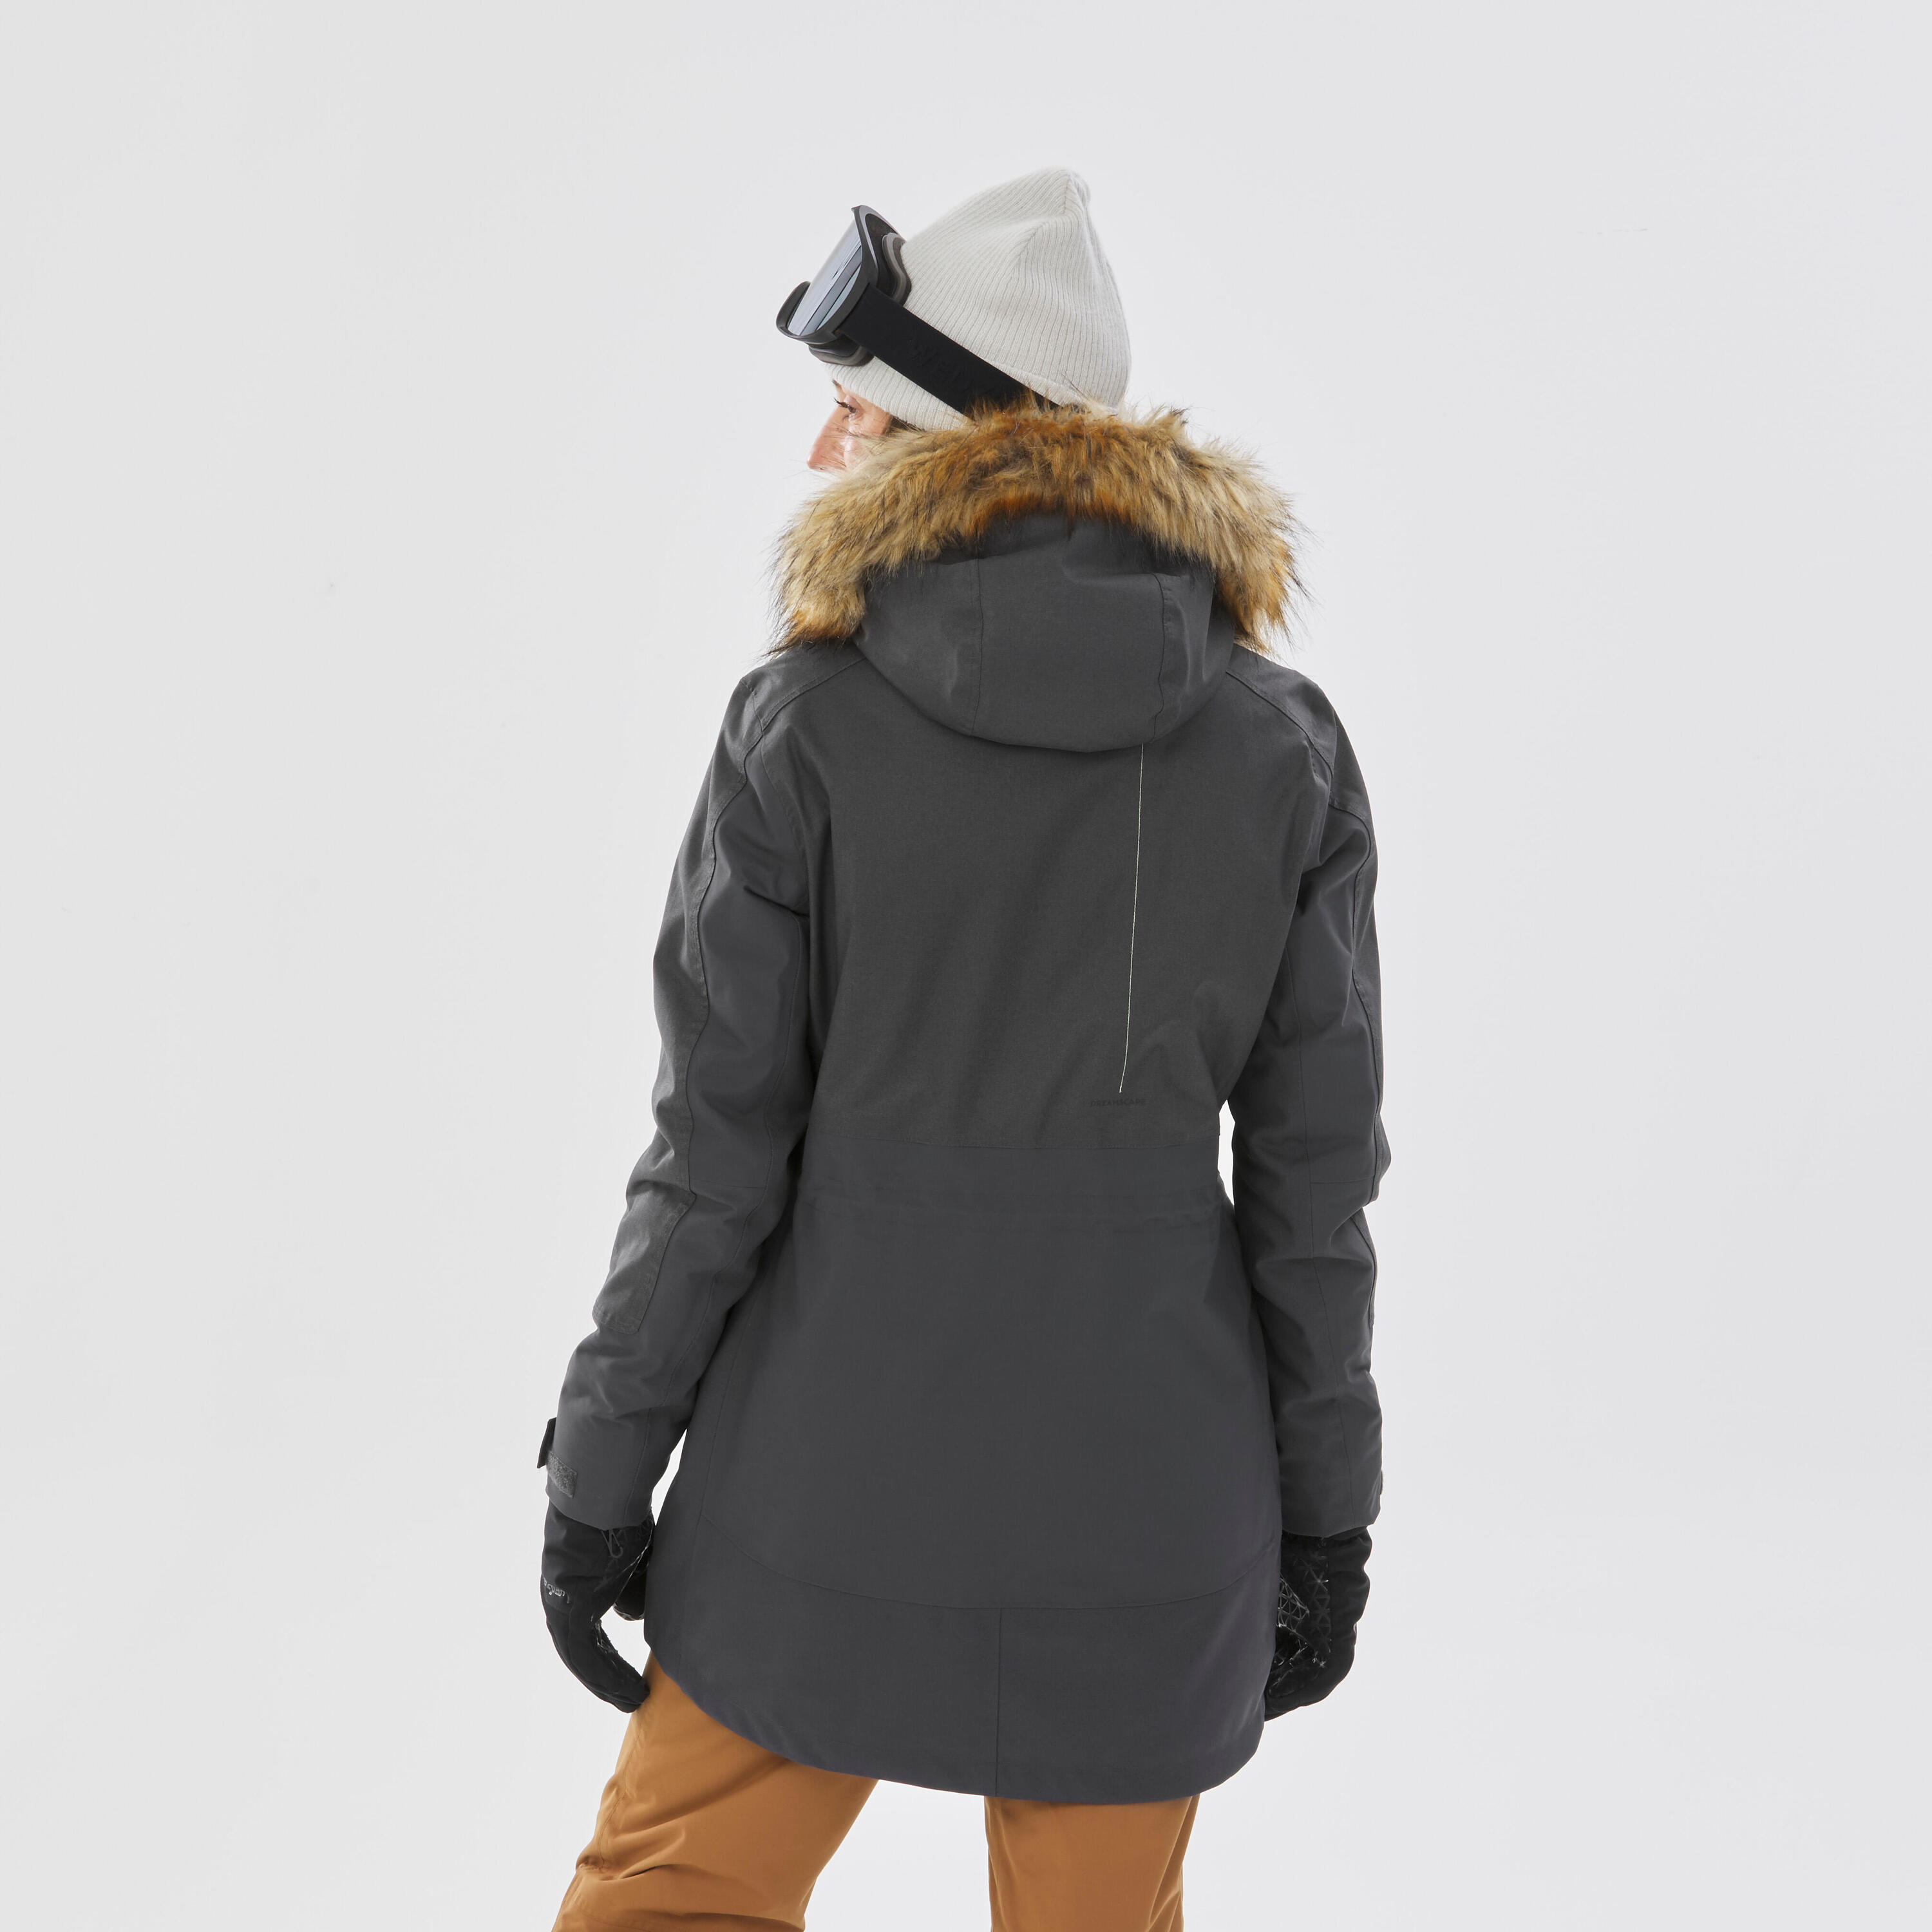 Women’s Snowboard Jacket ZIPROTEC compatible - SNB 500  - grey 6/19